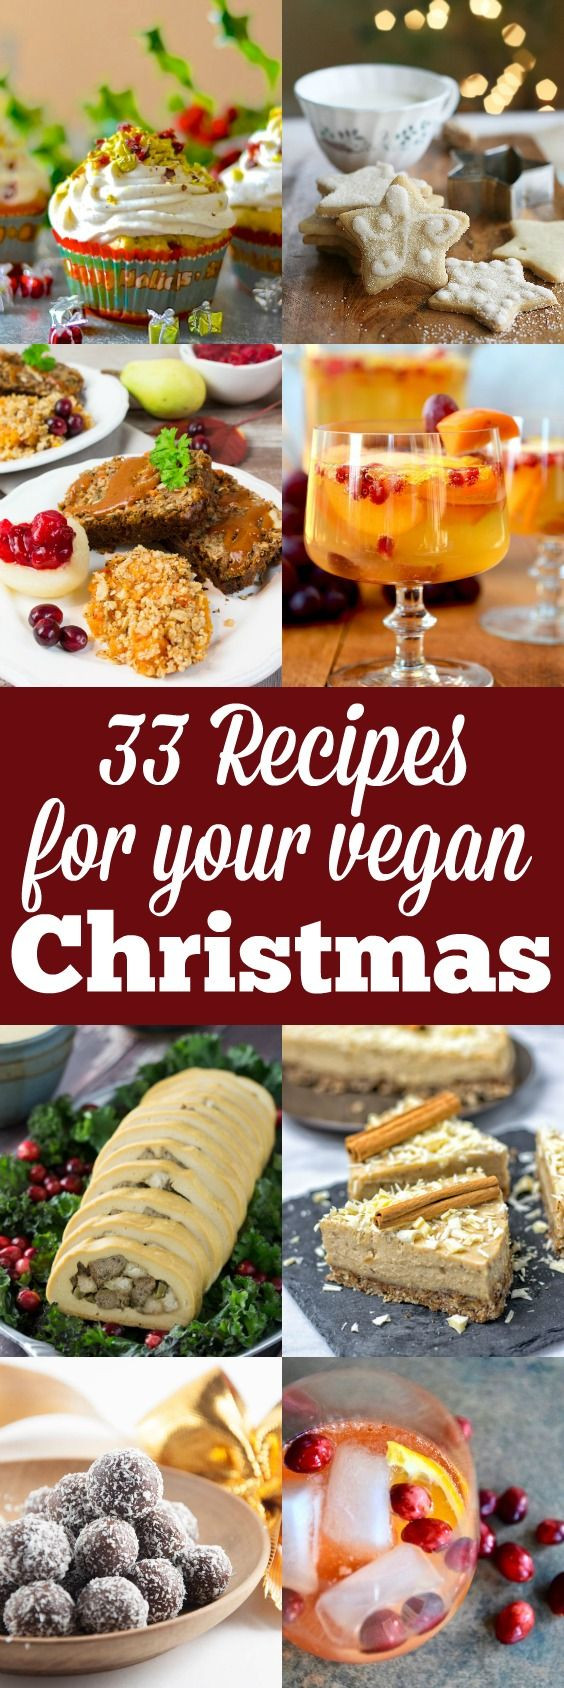 Christmas Vegan Recipes
 25 best ideas about Vegan Christmas on Pinterest